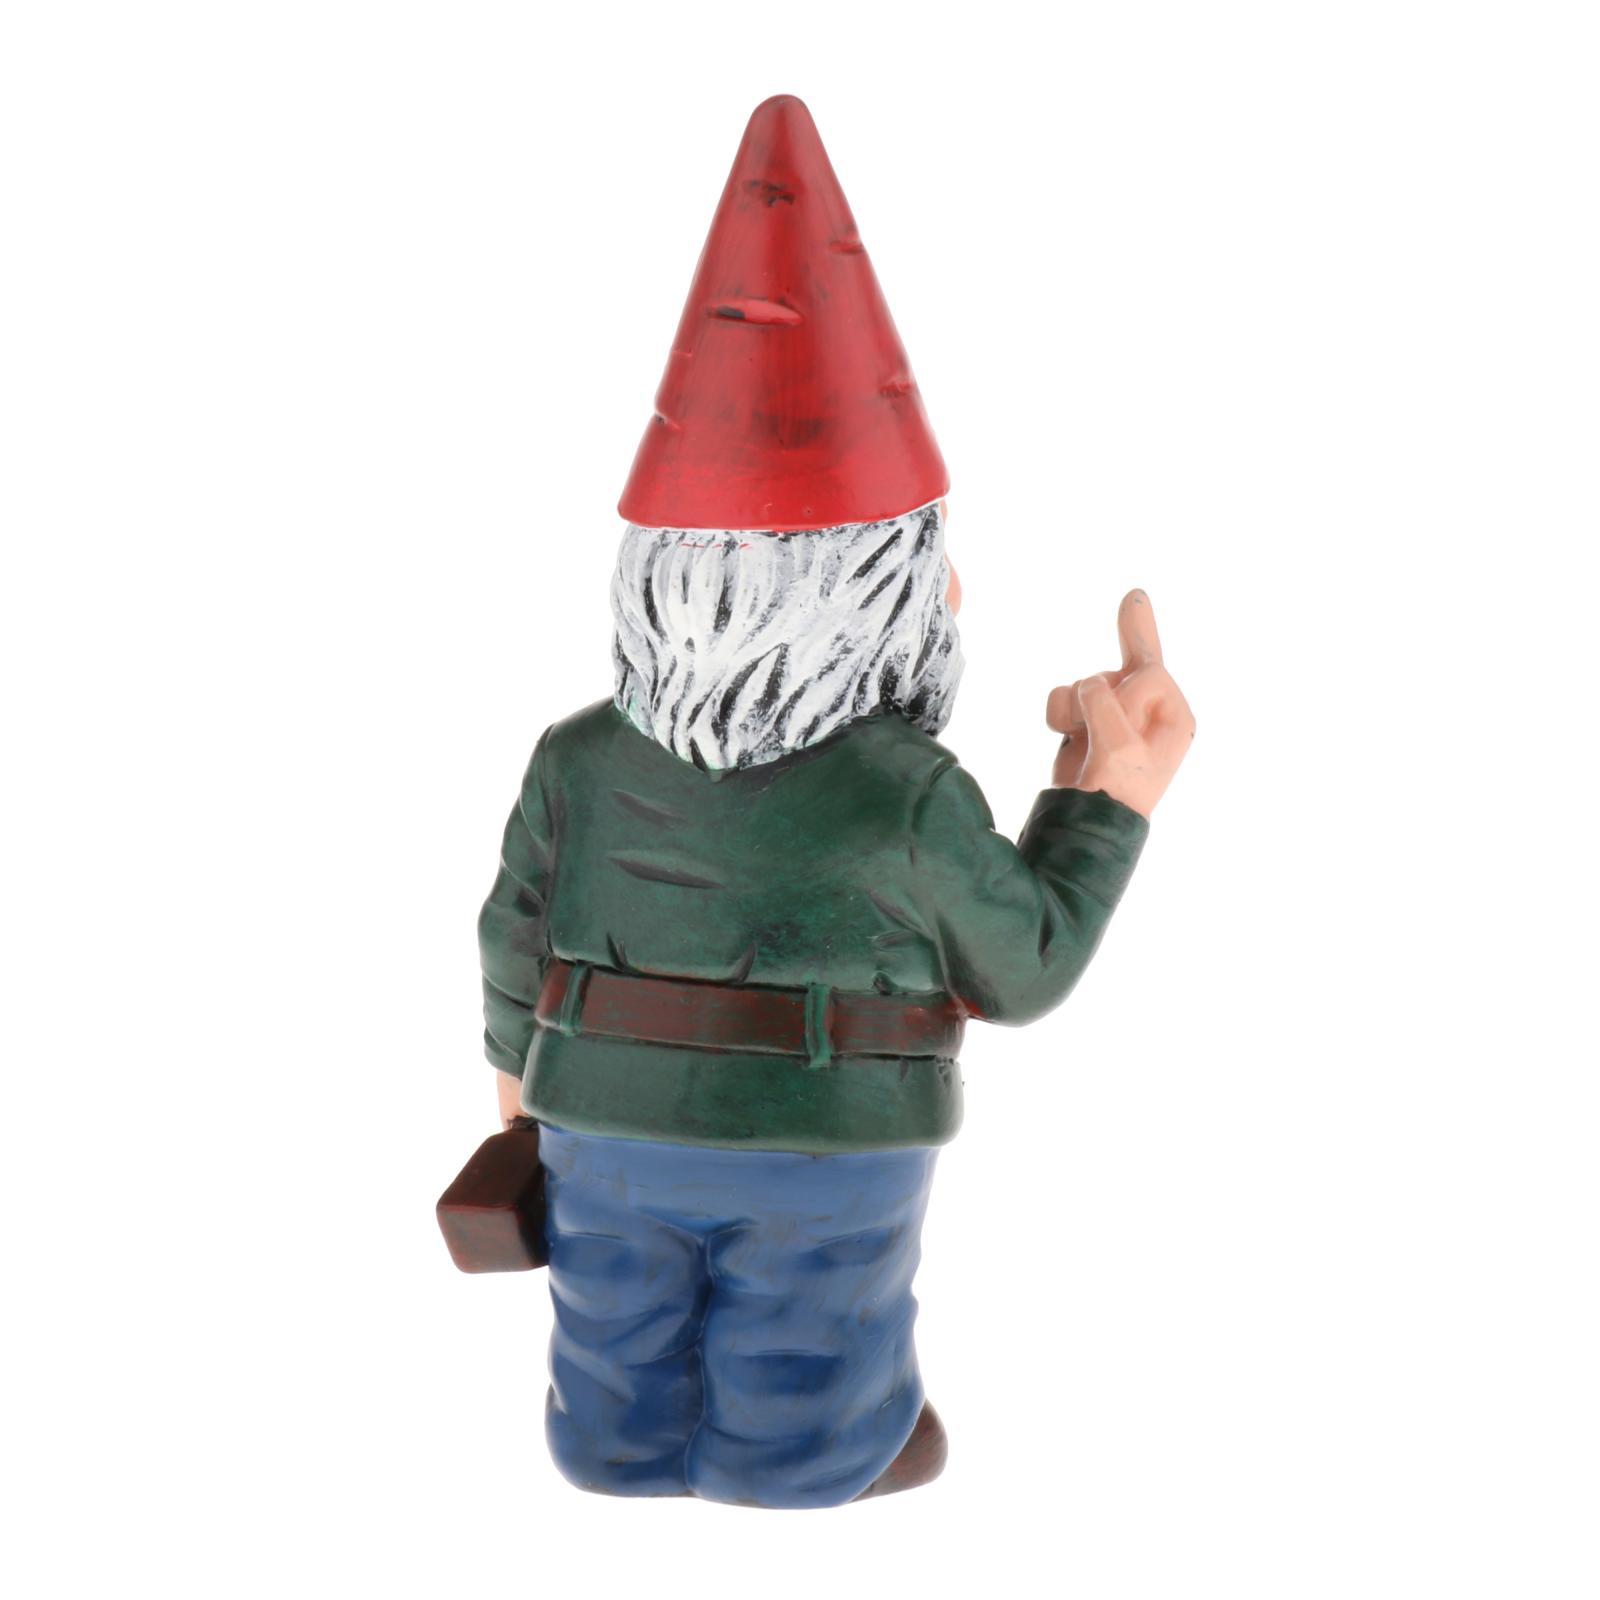 Funny Resin Garden Gnome Statue Ornaments Outdoor Home Decor Figurines A